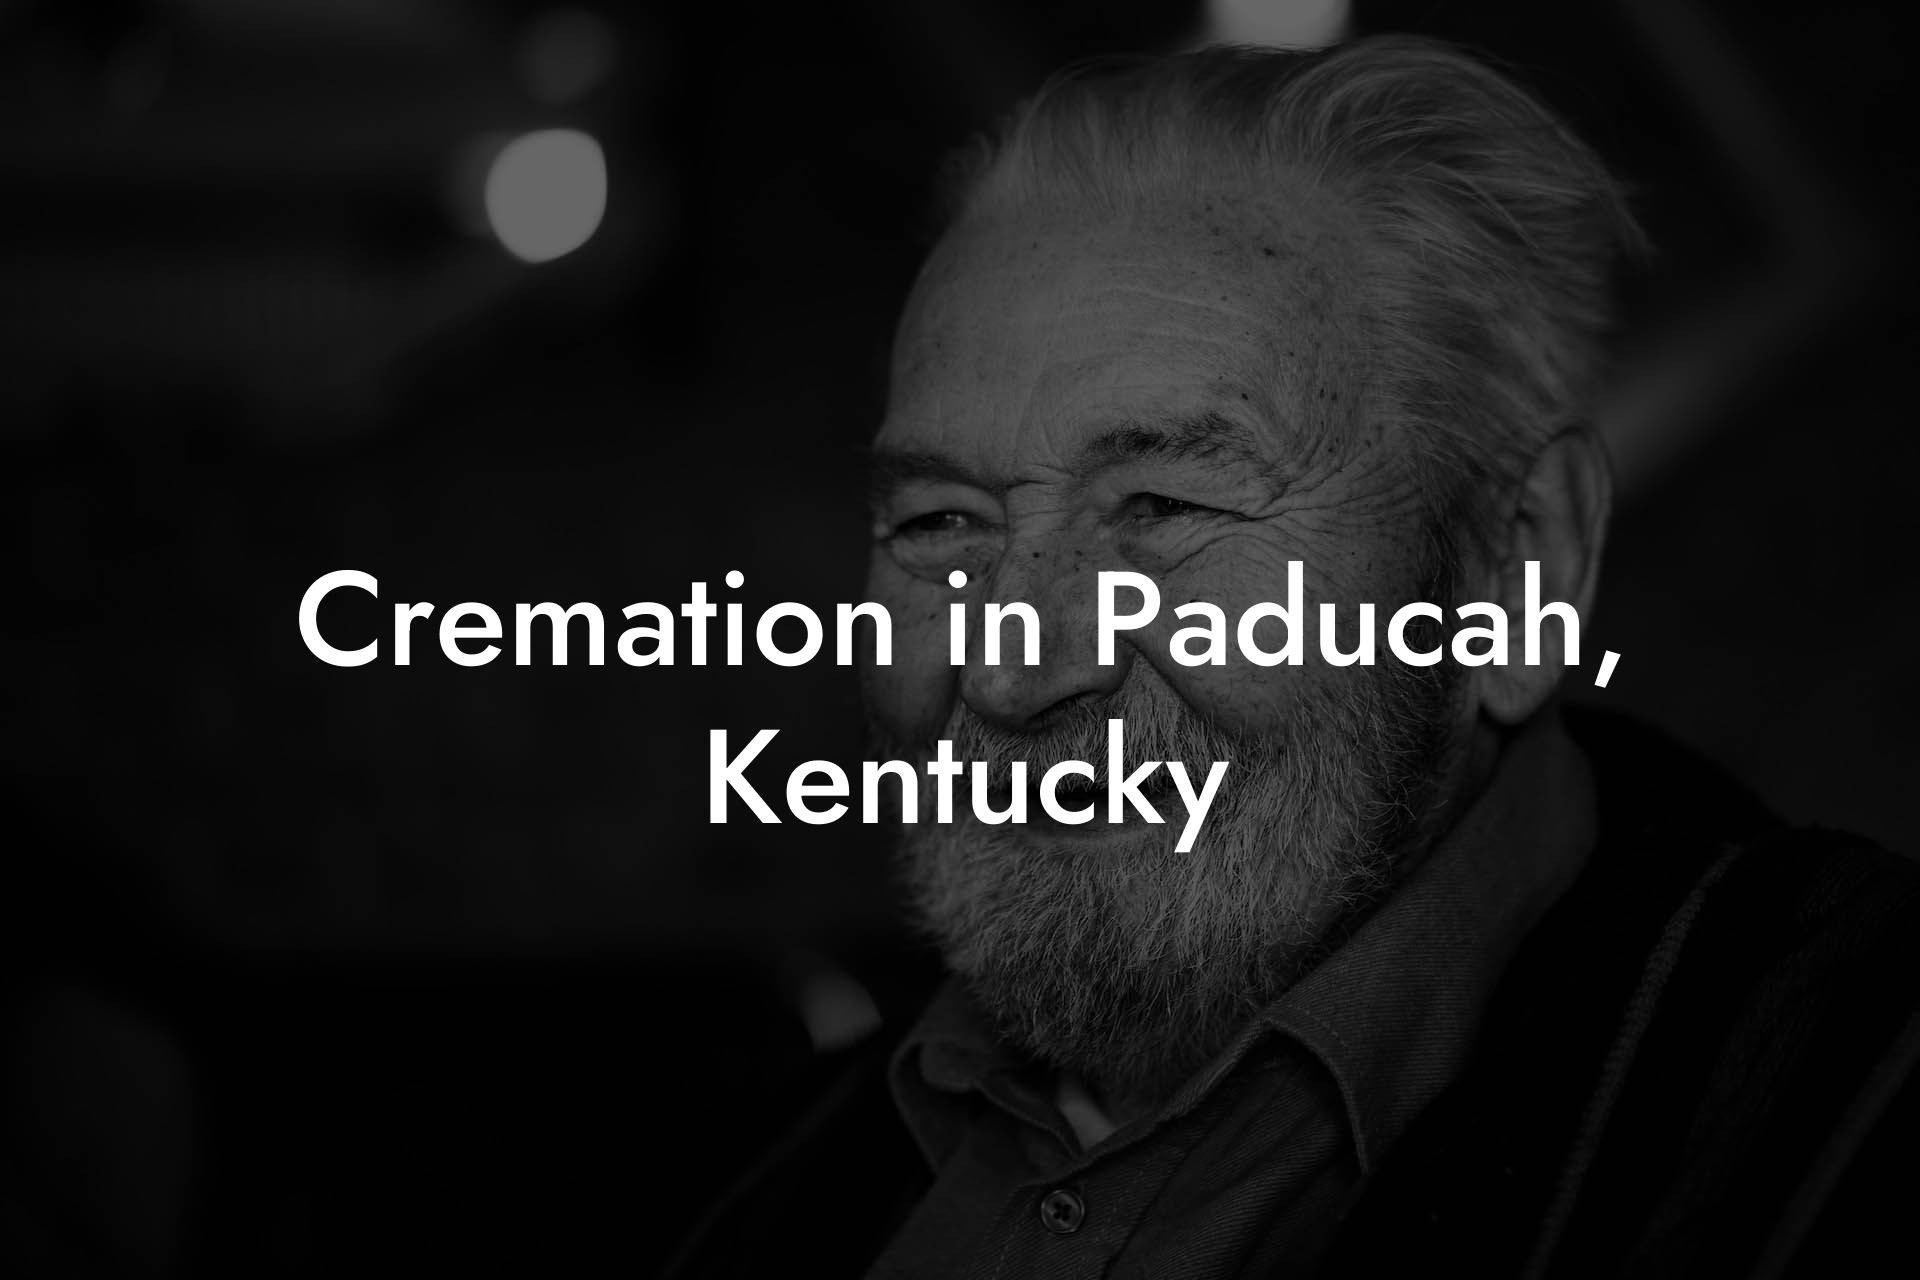 Cremation in Paducah, Kentucky